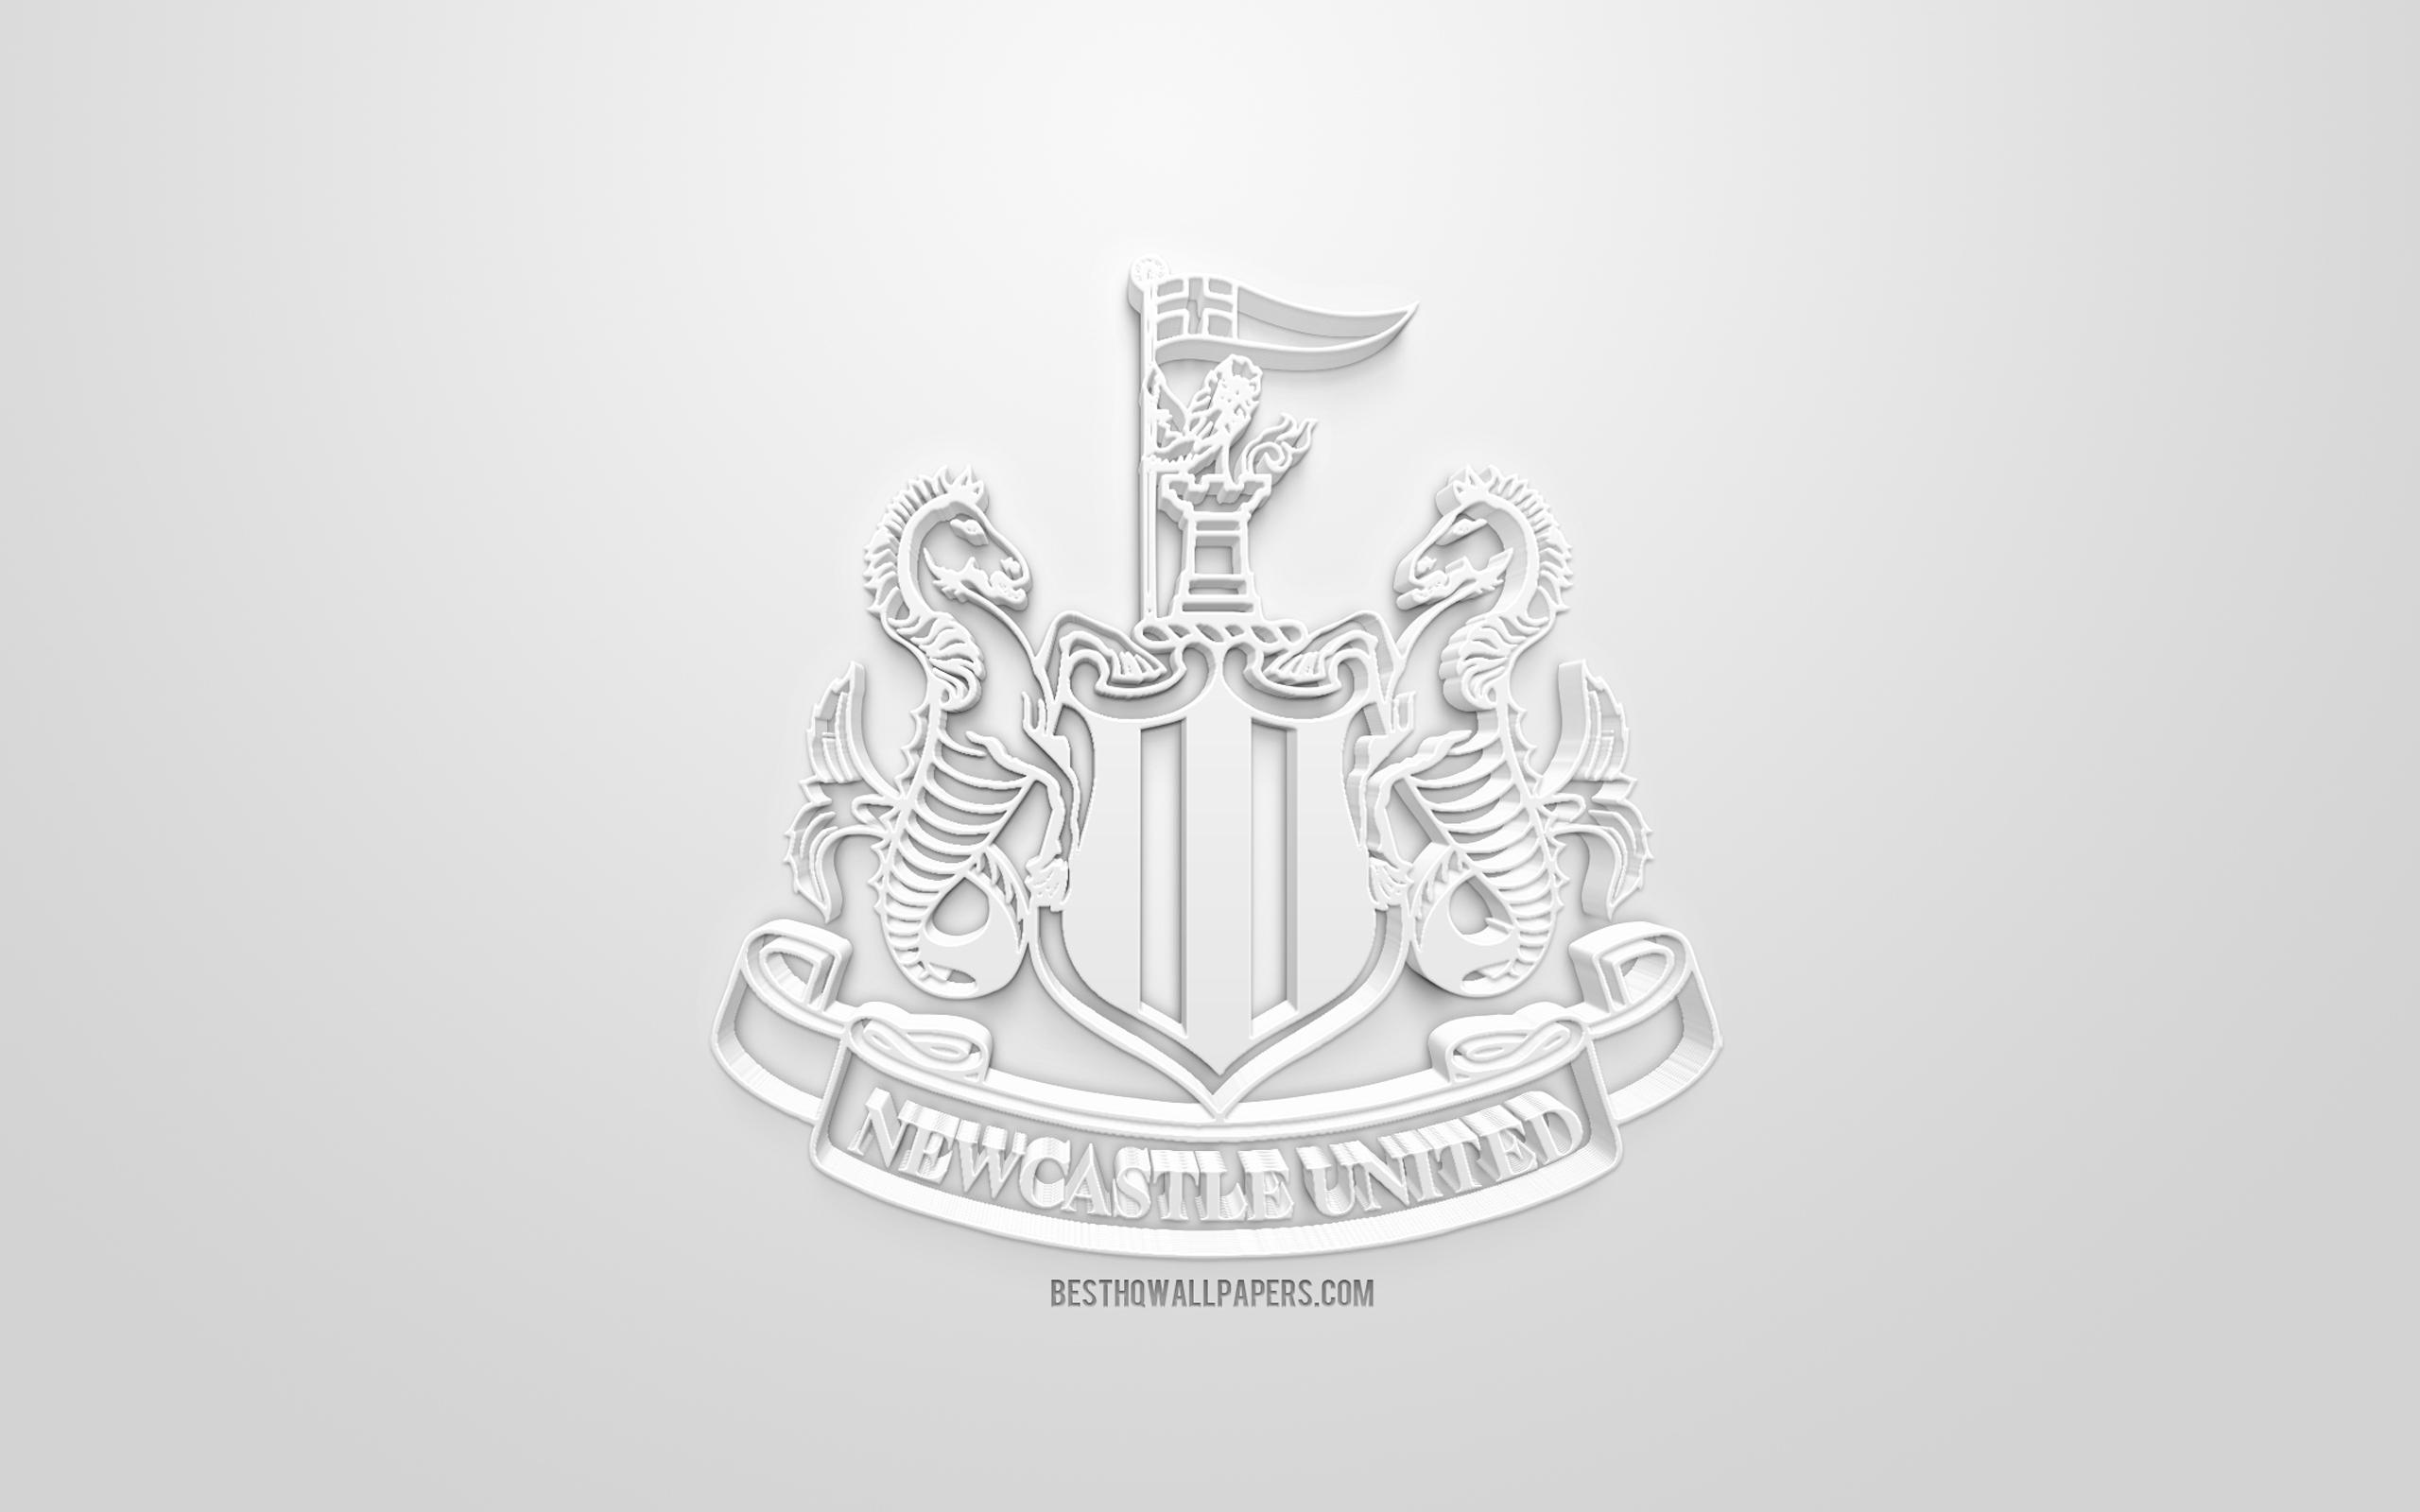 Download wallpaper Newcastle United FC, creative 3D logo